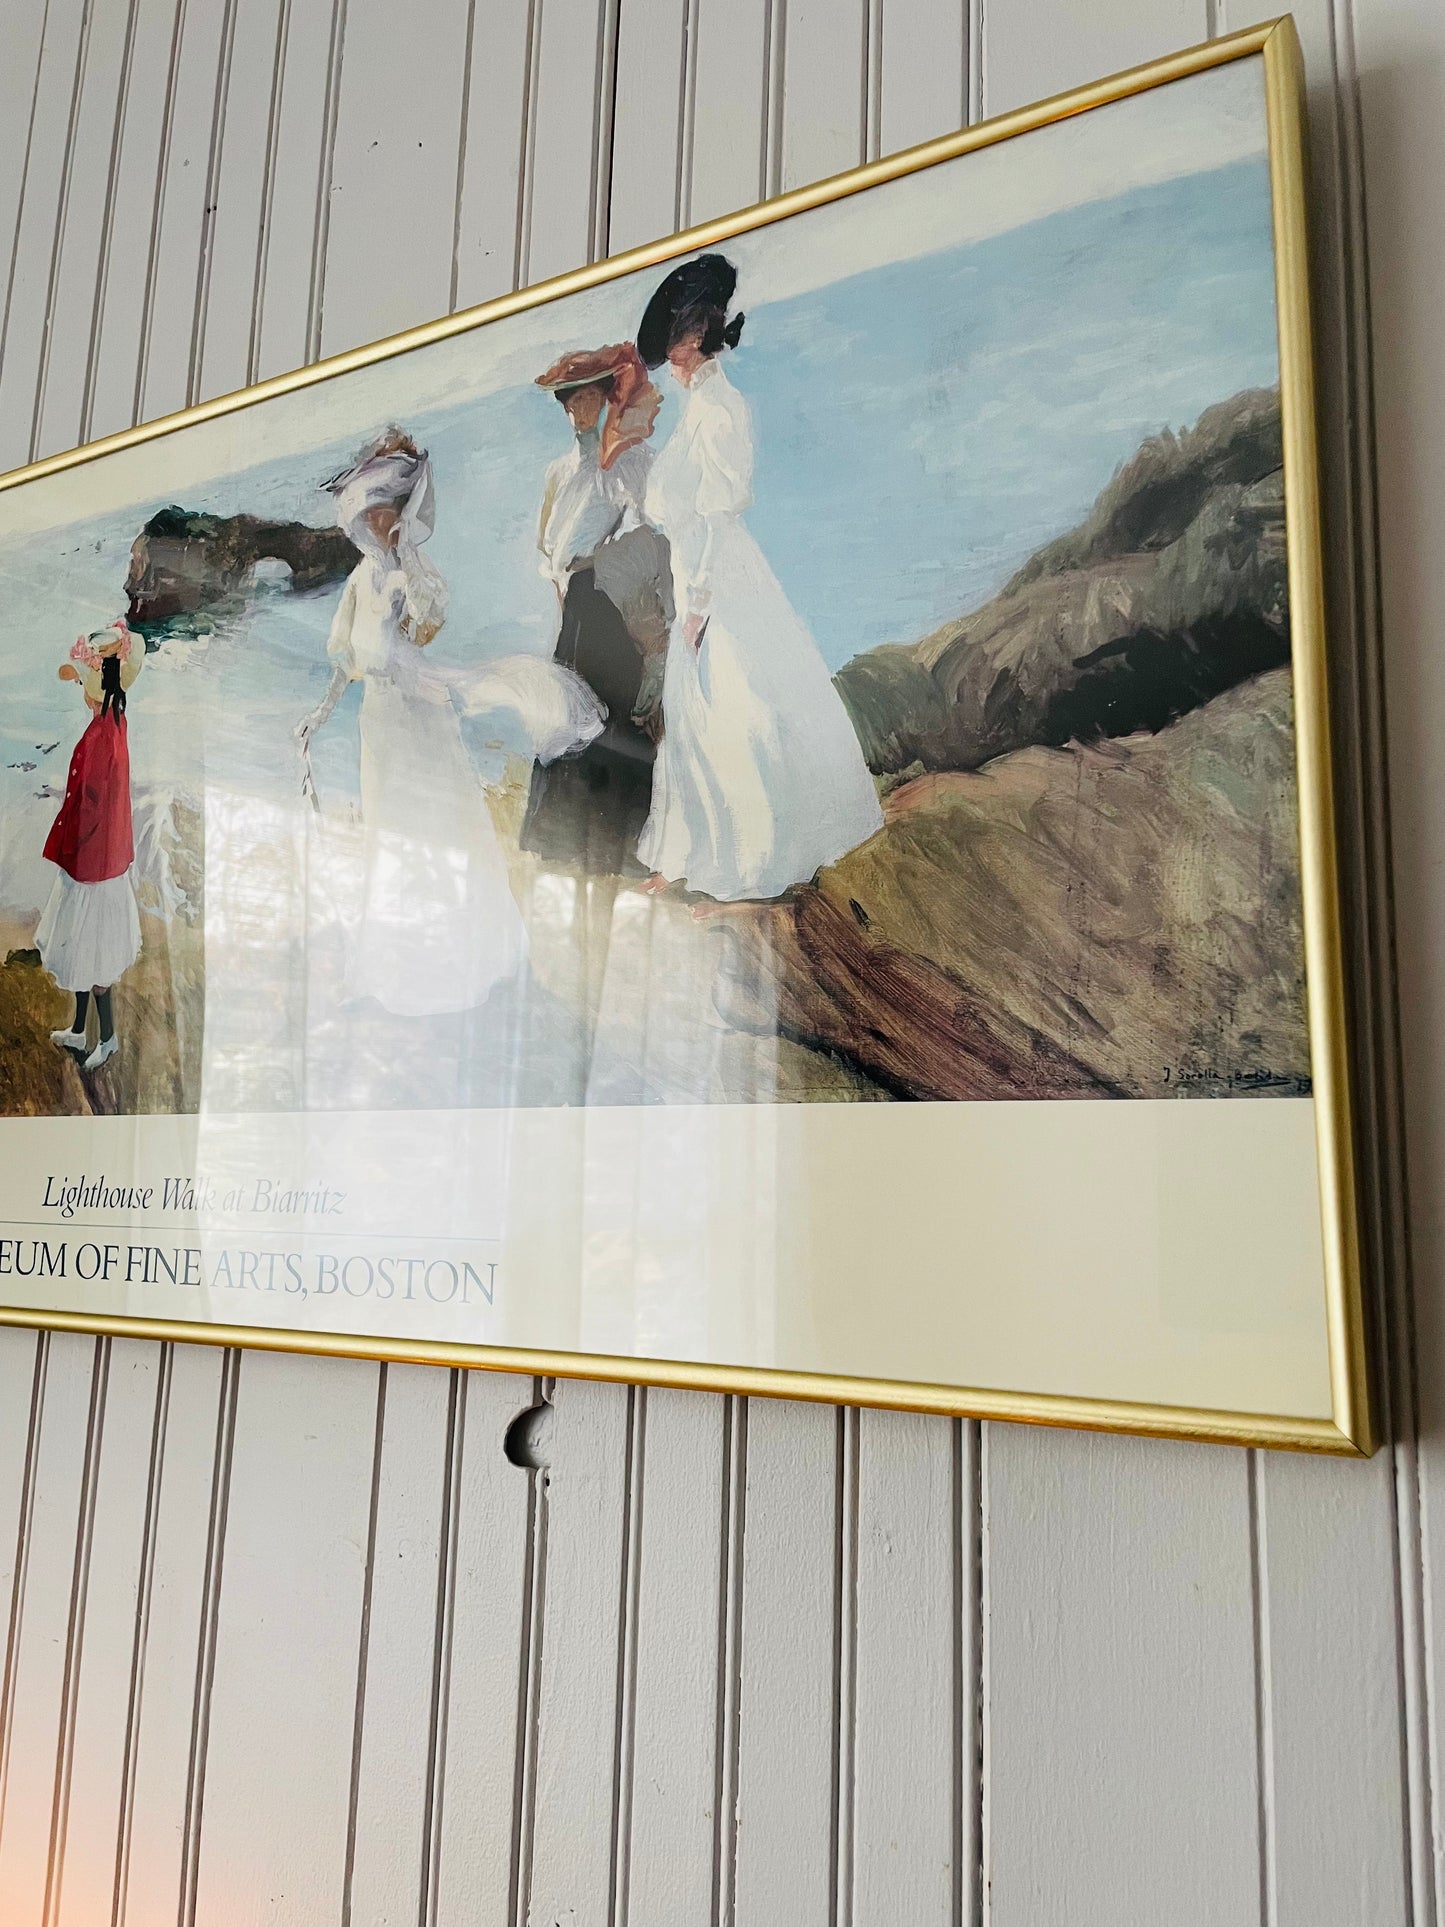 Joaquin Sorolla y Bastida, Lighthouse Walk at Biarritz - Museum of Fine Arts Boston Framed Museum Poster Print